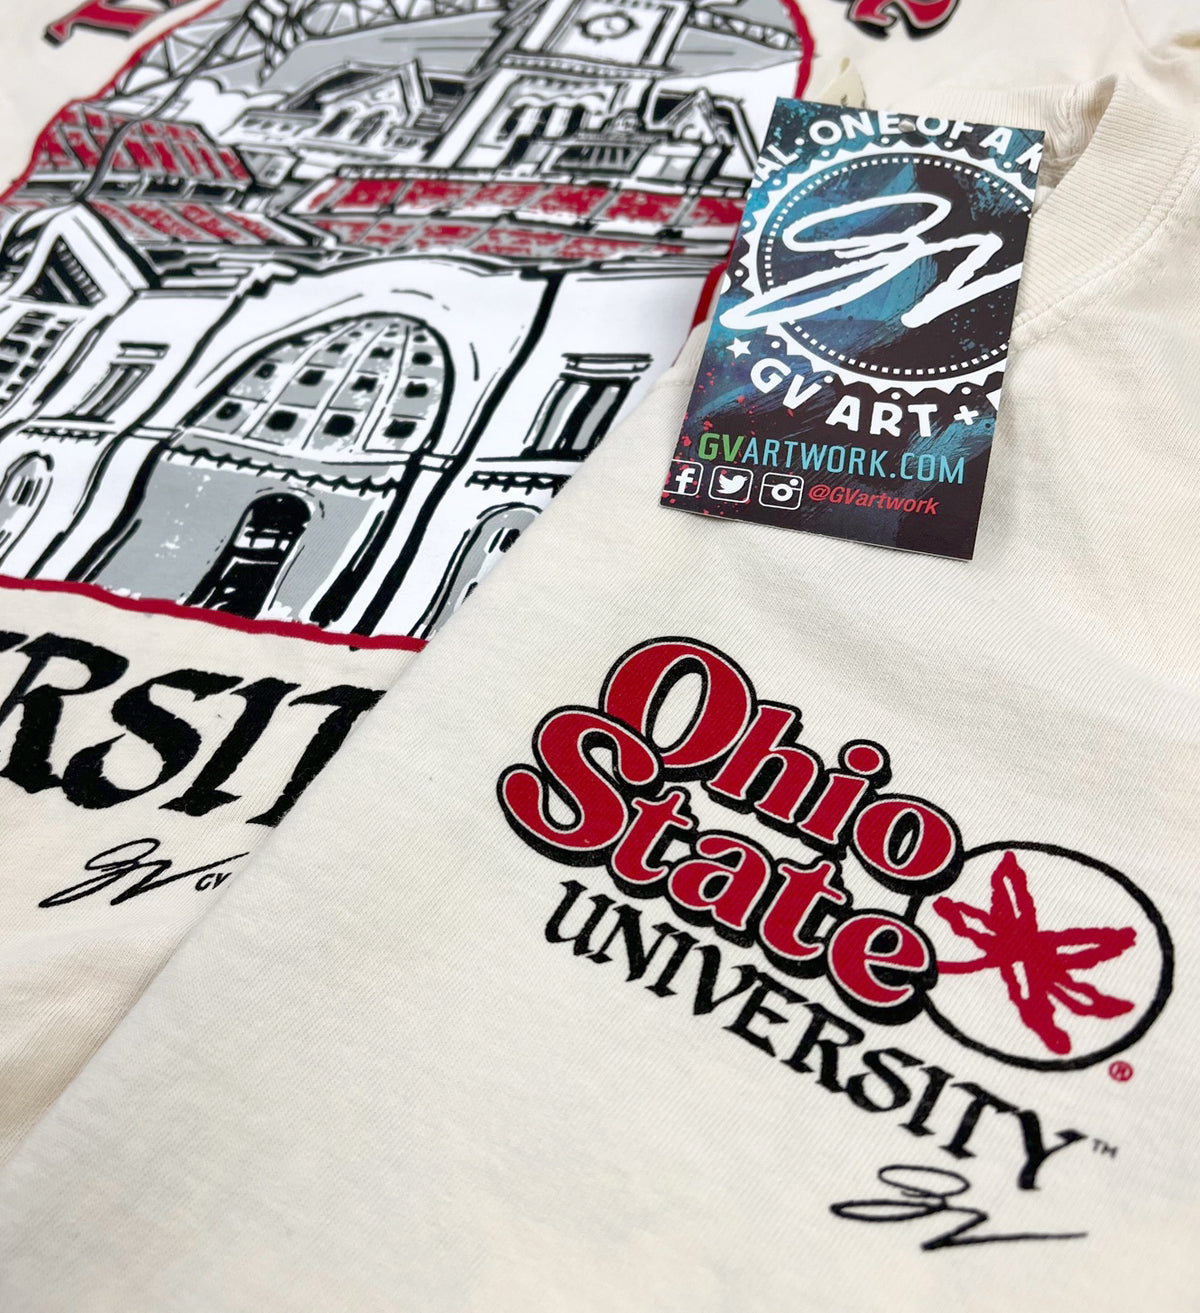 The Ohio State University Artwork T Shirt